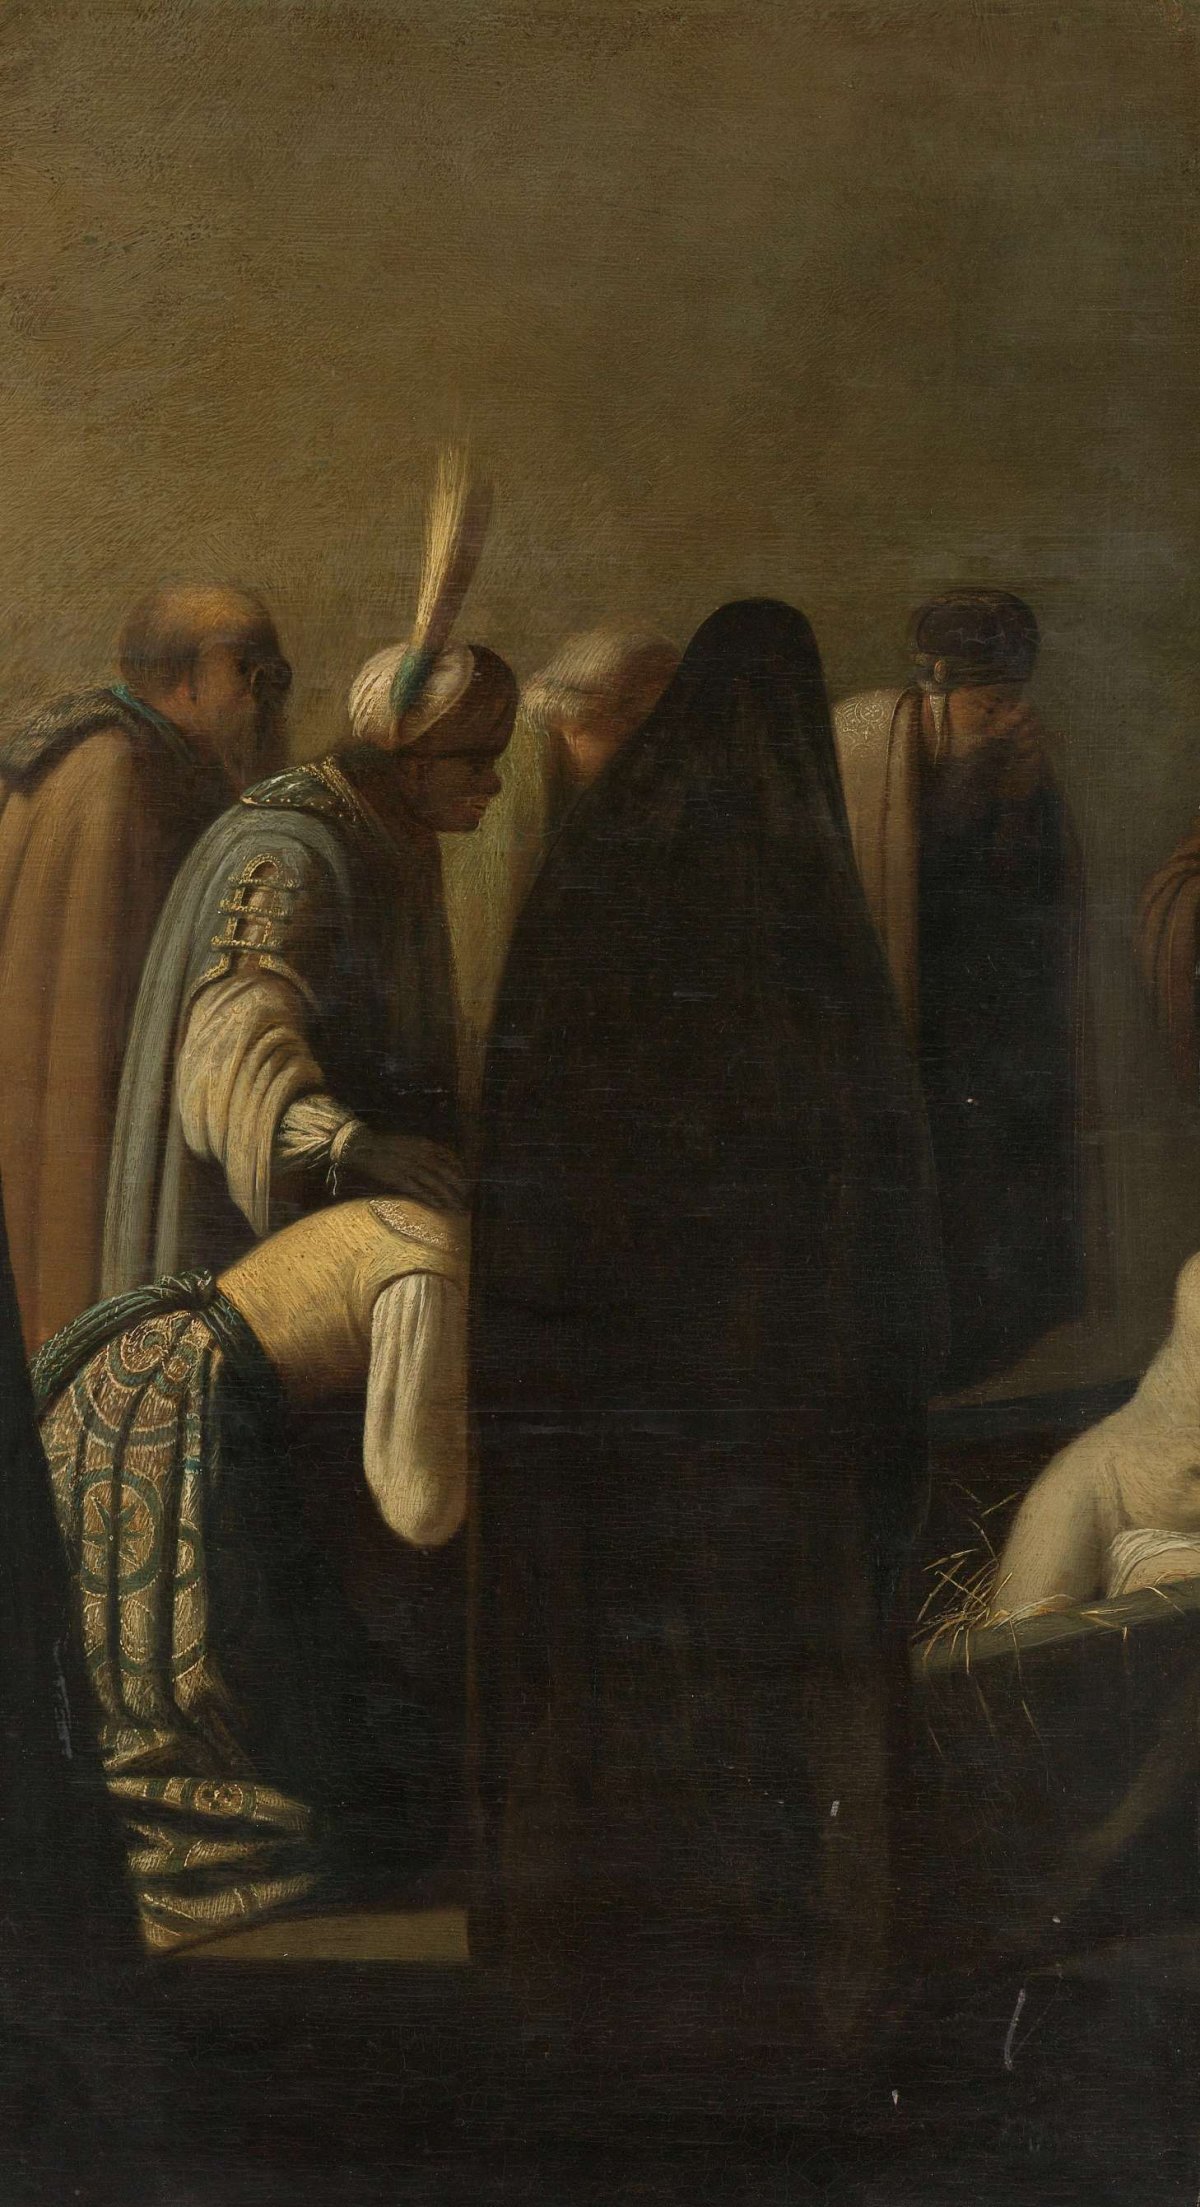 The raising of Lazarus, Rembrandt van Rijn, 1620 - 1650